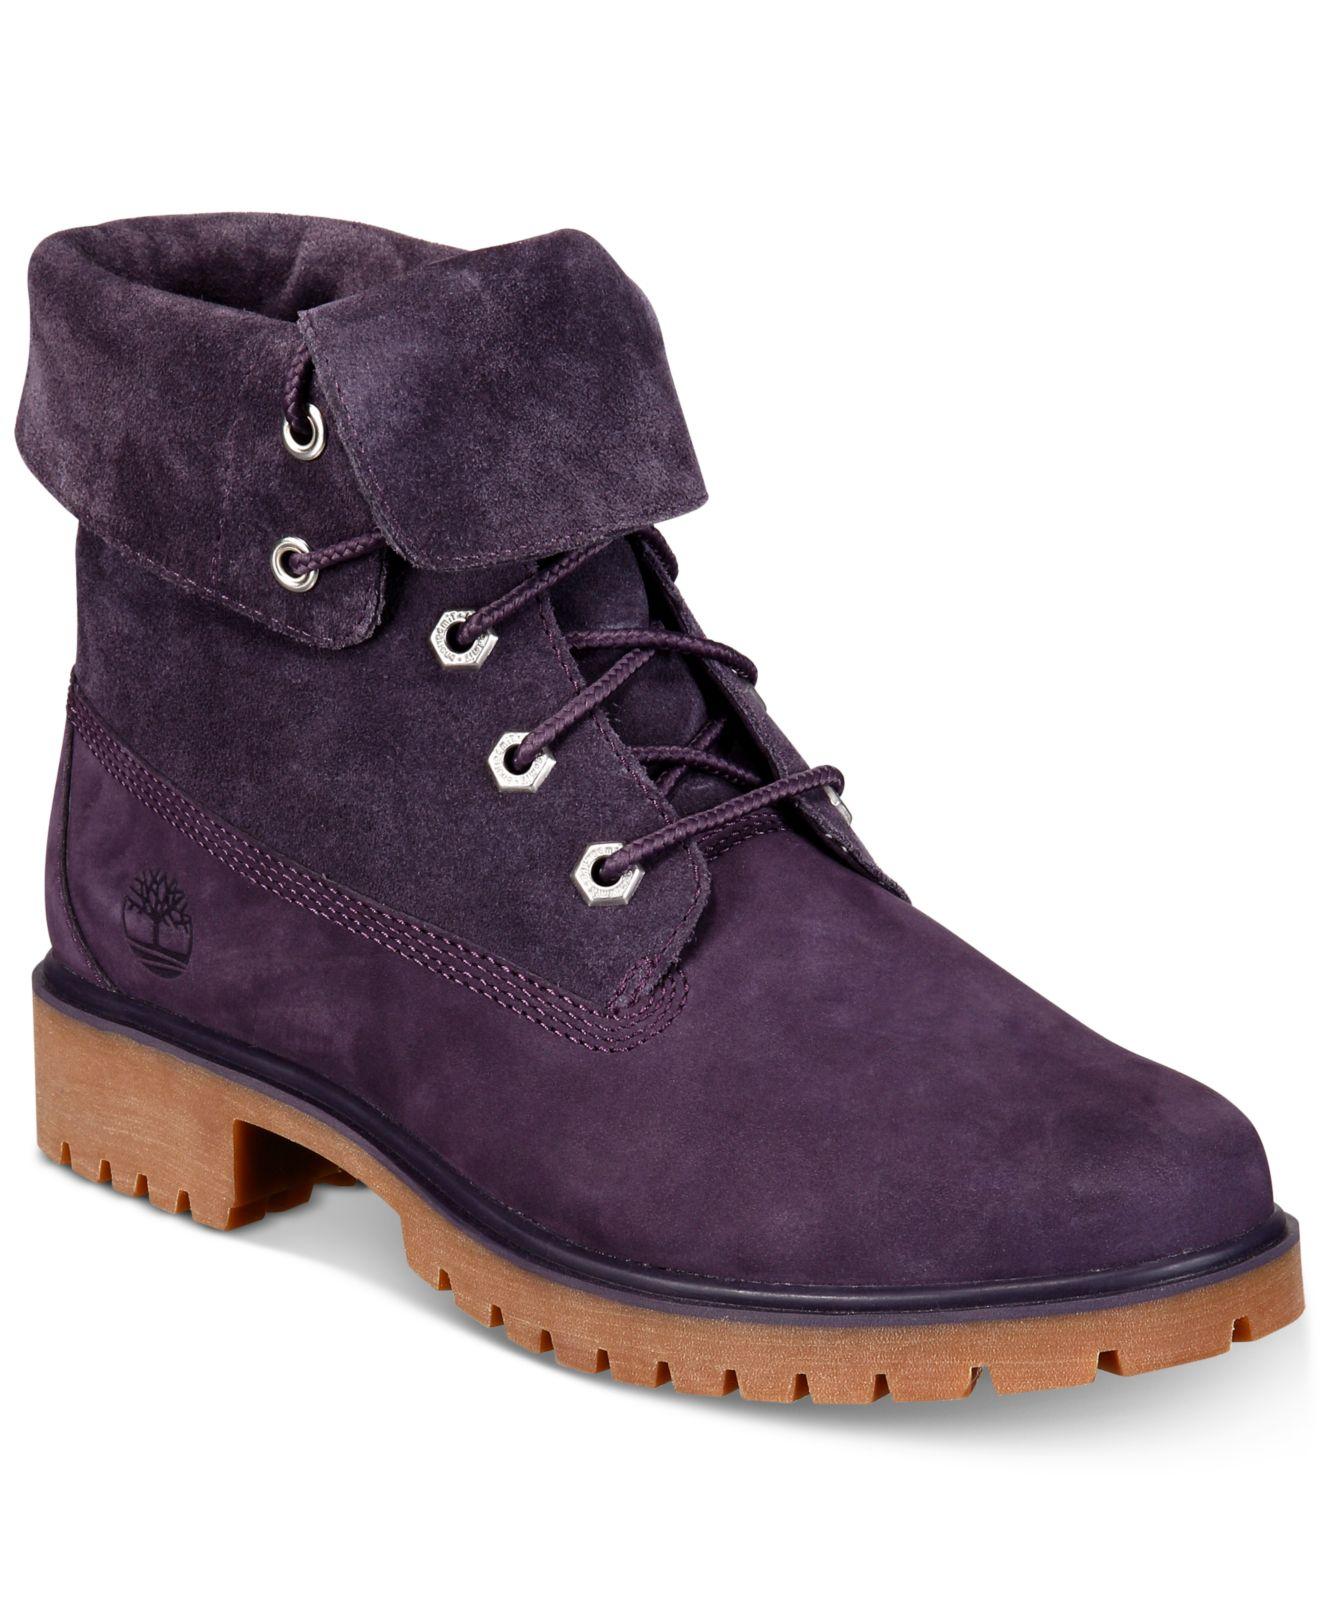 purple travel boots